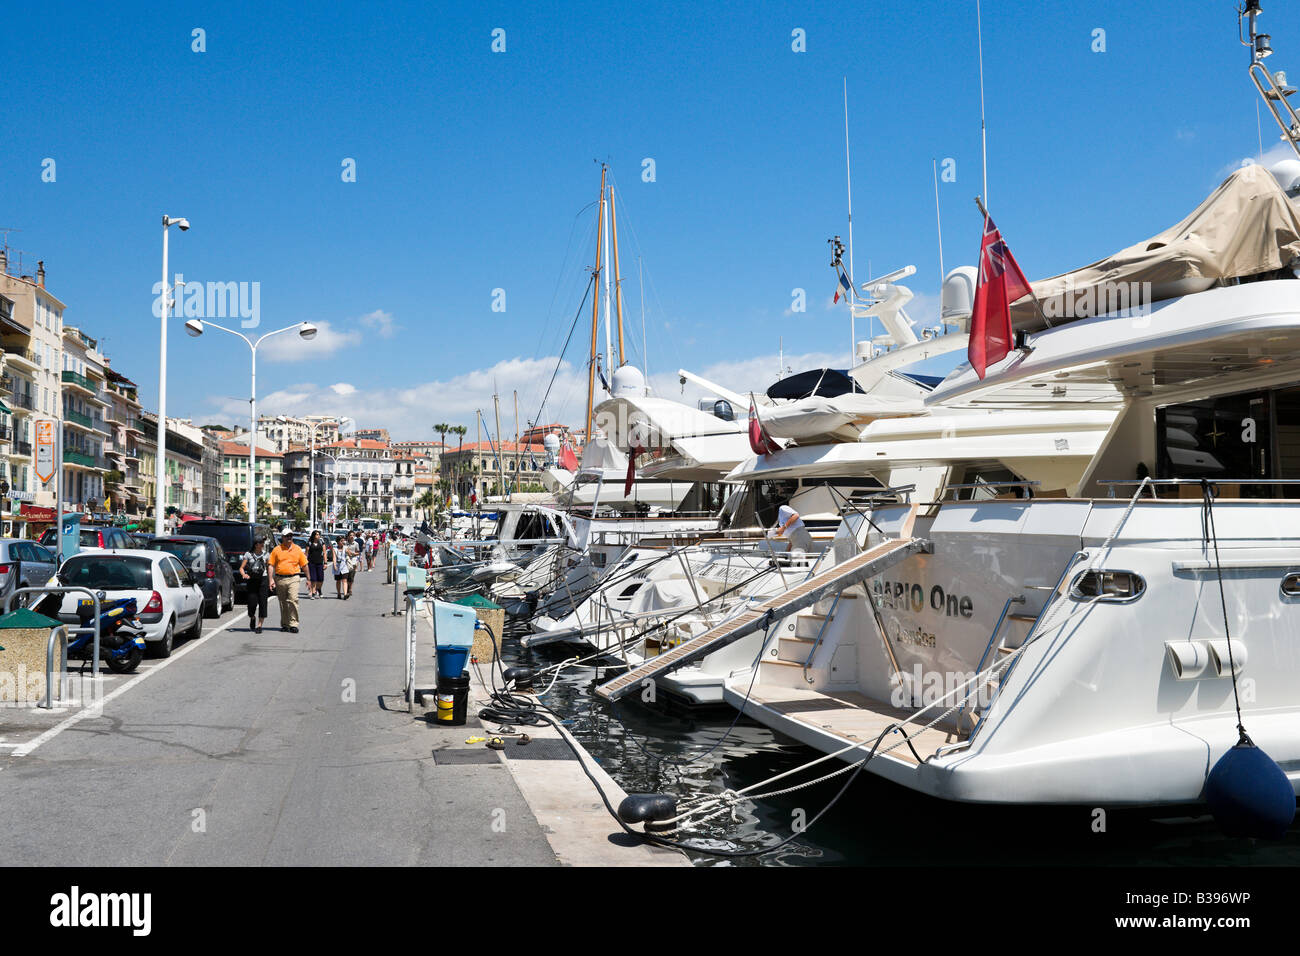 Luxusyachten im Vieux Port (Alter Hafen), Quai St Pierre, Cannes, Cote d Azur, Provence, Frankreich Stockfoto